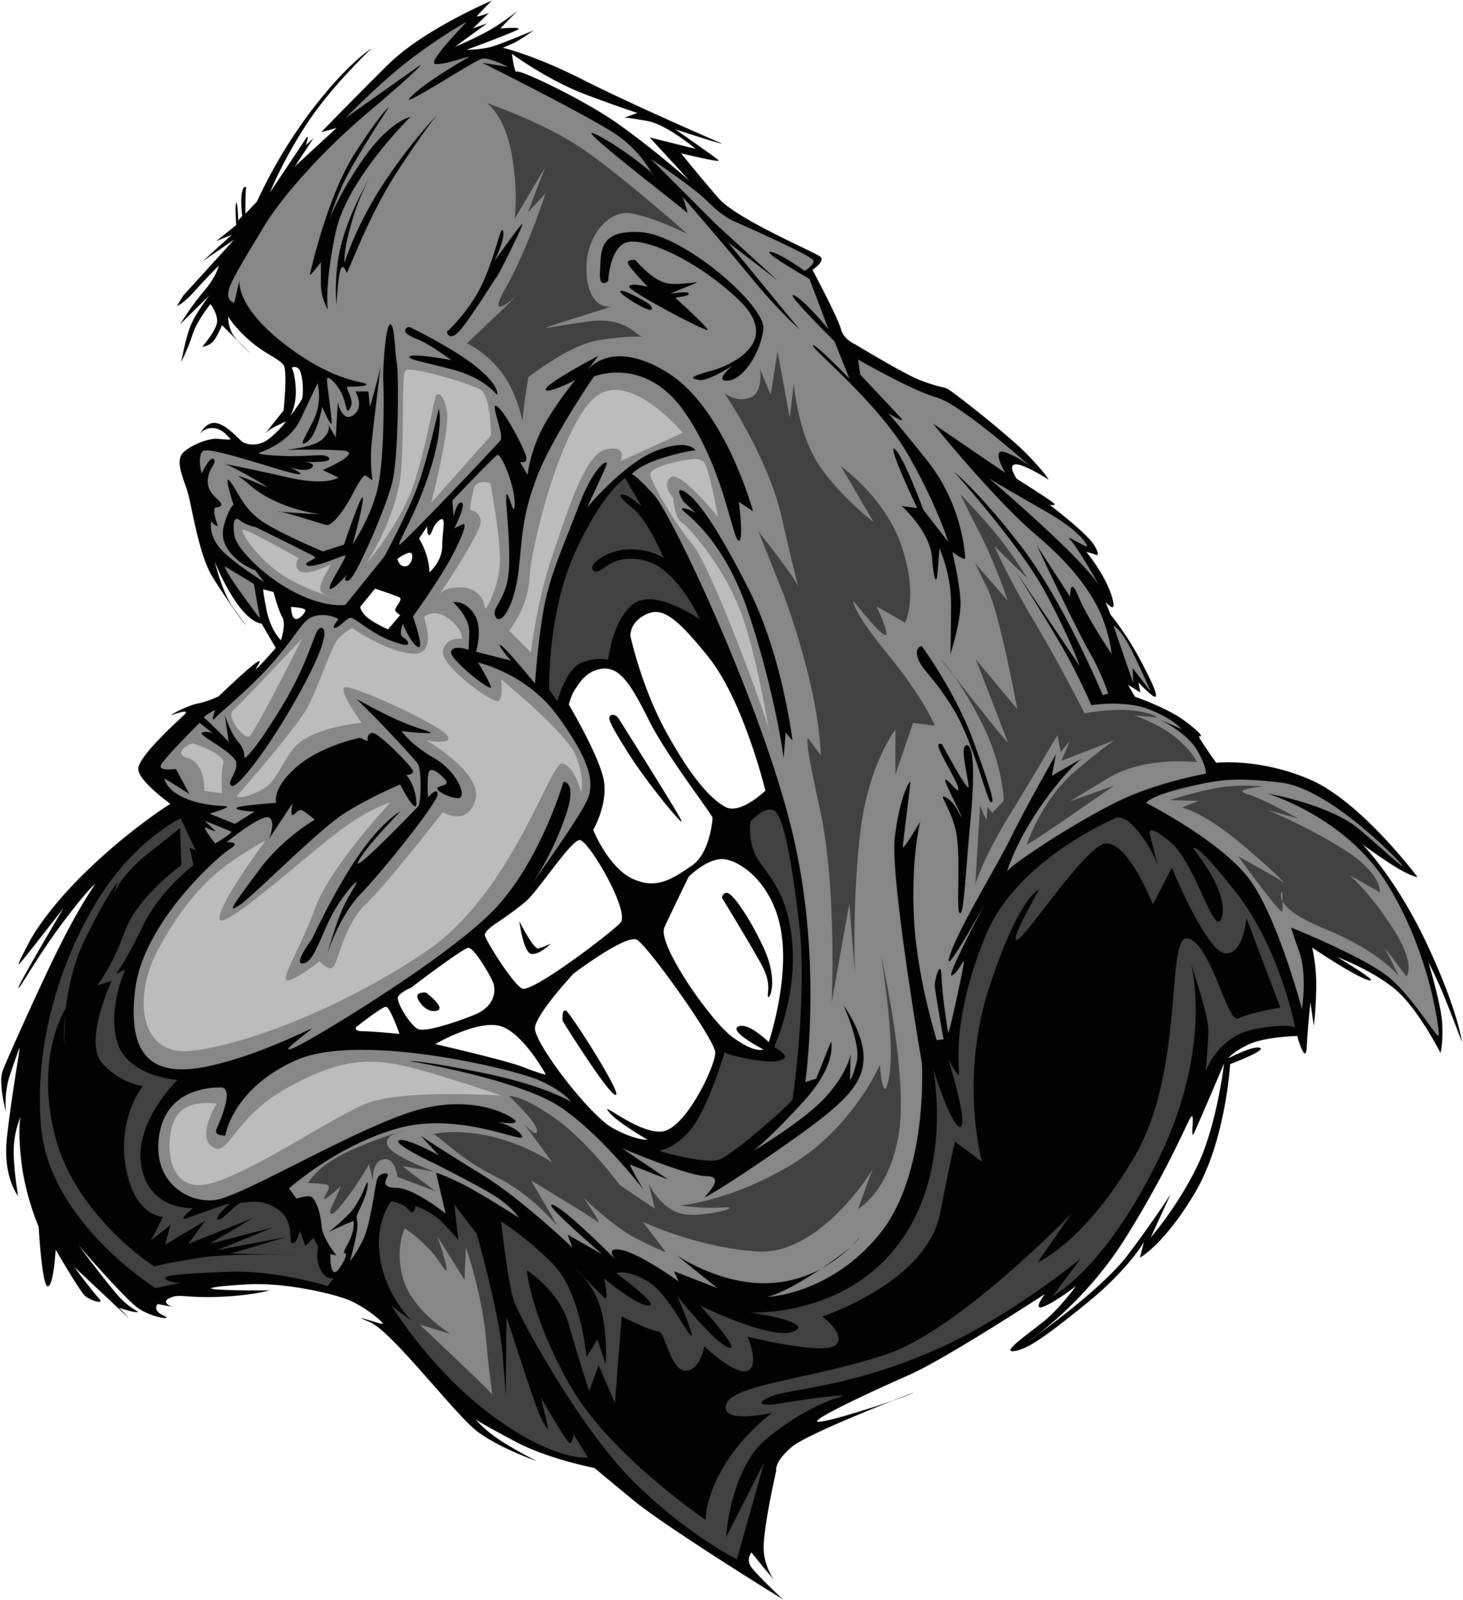 Gorilla or Ape Mascot Cartoon by chromaco